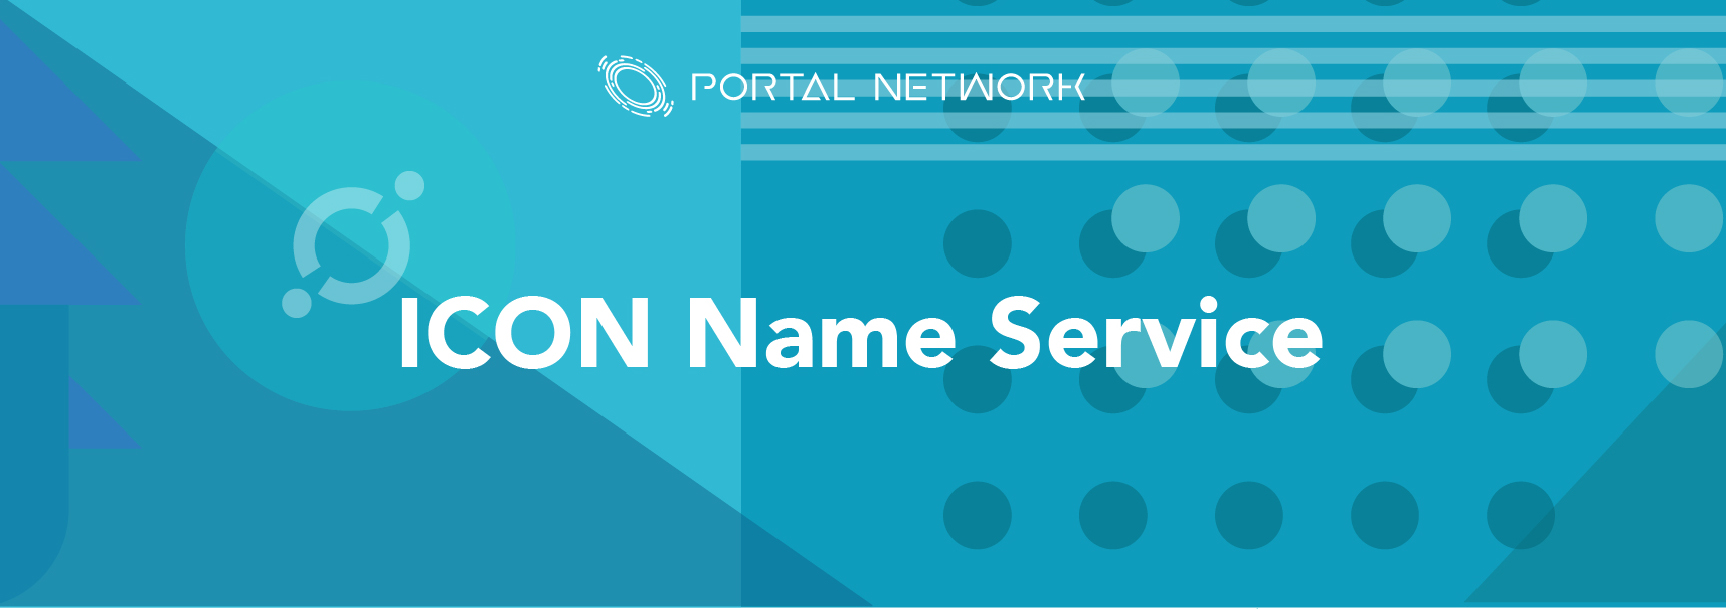 ICON Name Service